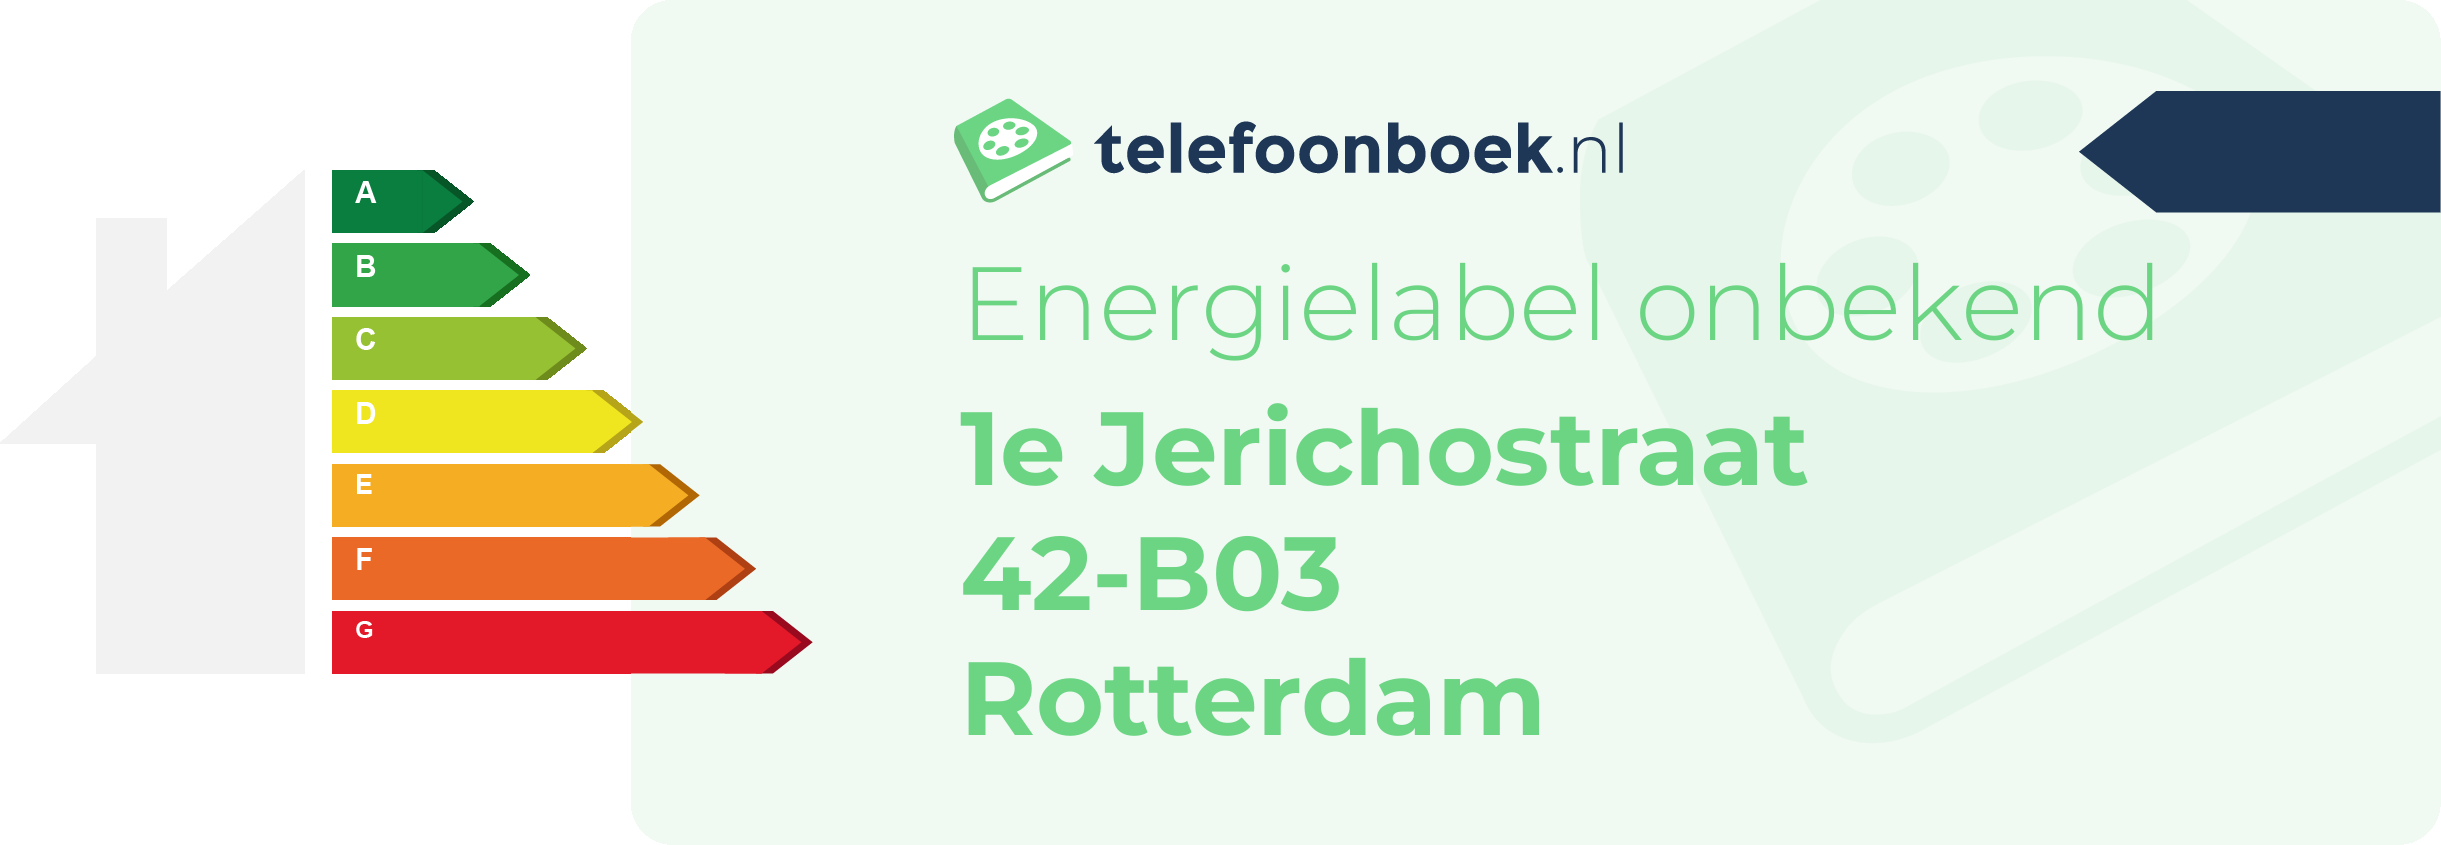 Energielabel 1e Jerichostraat 42-B03 Rotterdam